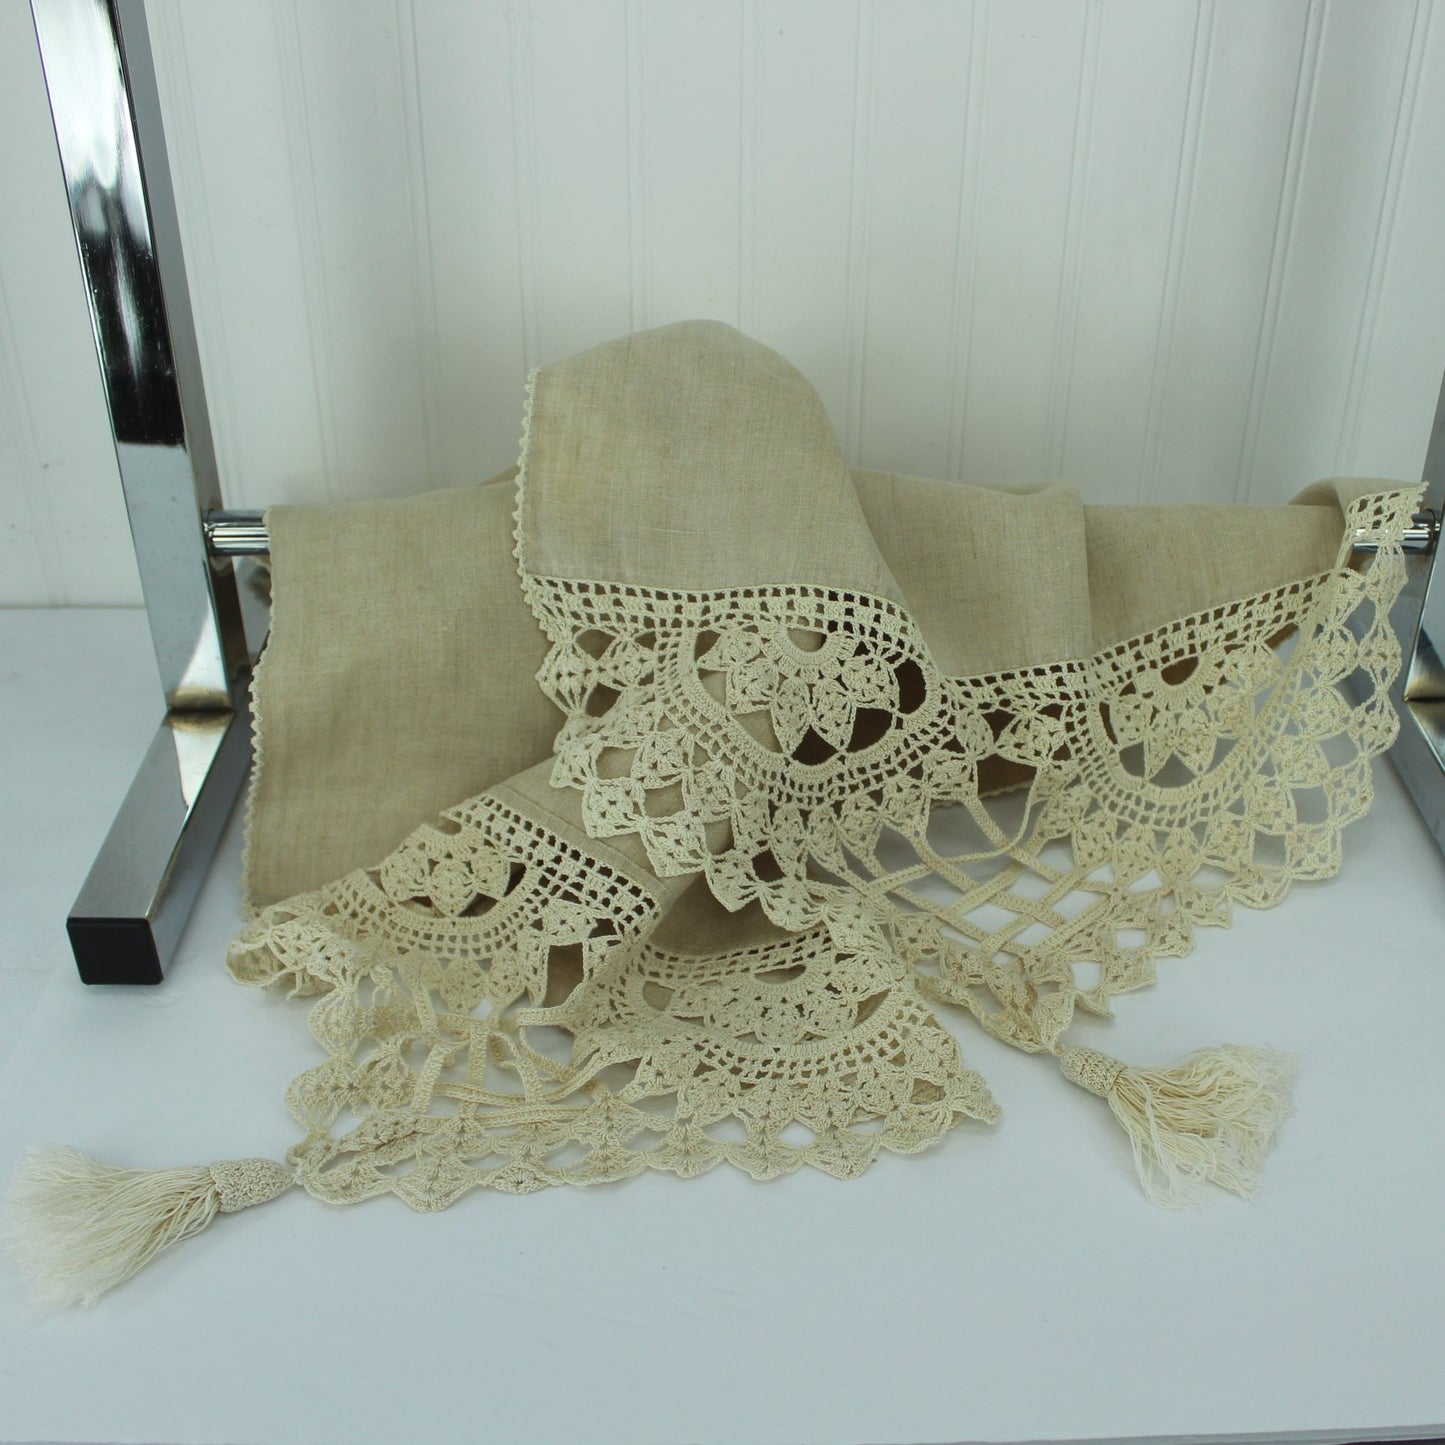 Long Antique Tassel Table Runner Natural Linen Lattice Work Crochet Great for Shawl Too beautiful hand work